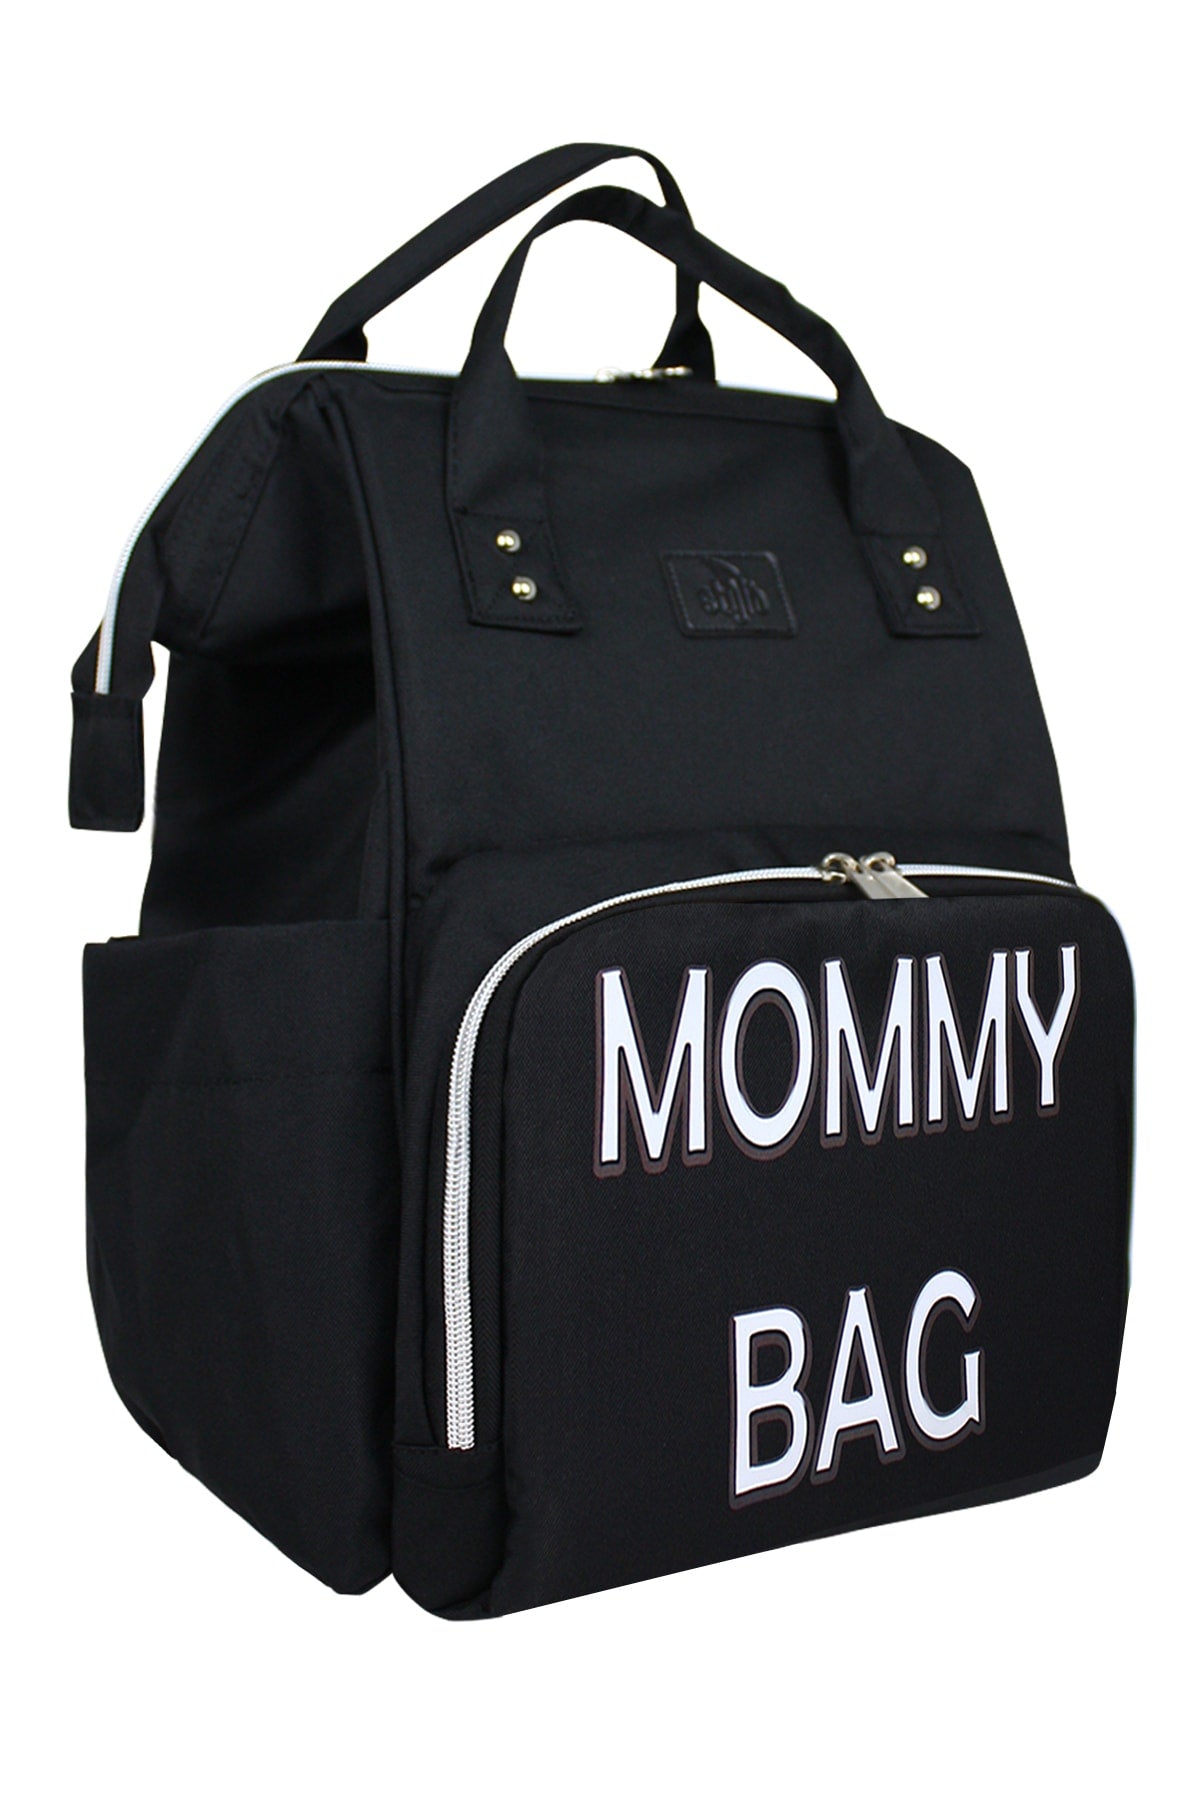 Paris Mommy Bag Printed Mommy Baby Bag